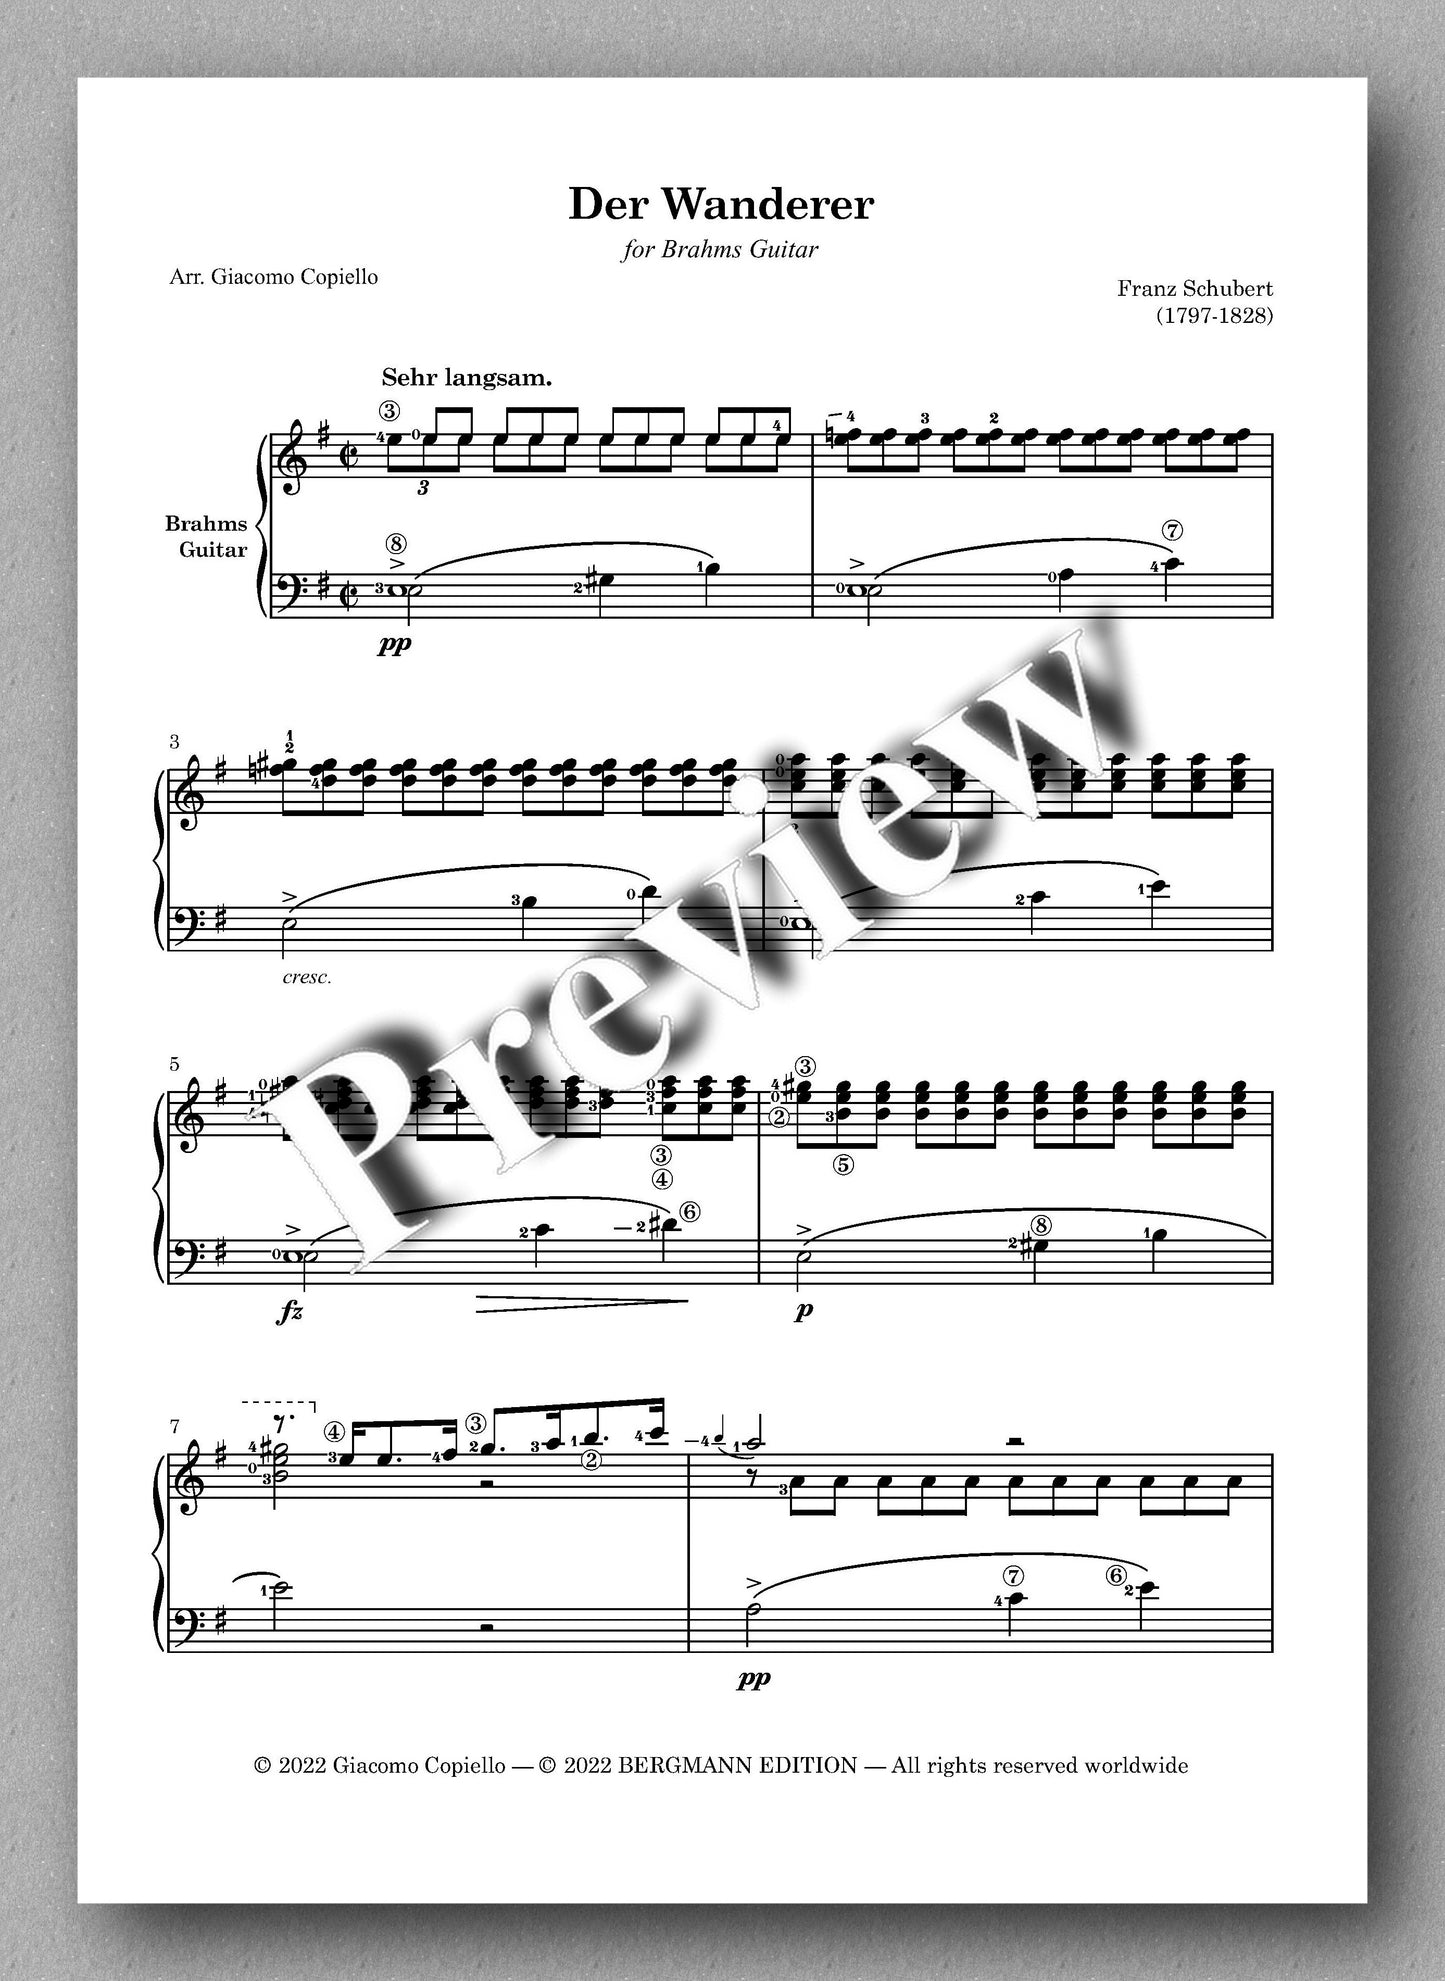 Lieder vol. 1, by Franz Schubert  - preview of the music score 1